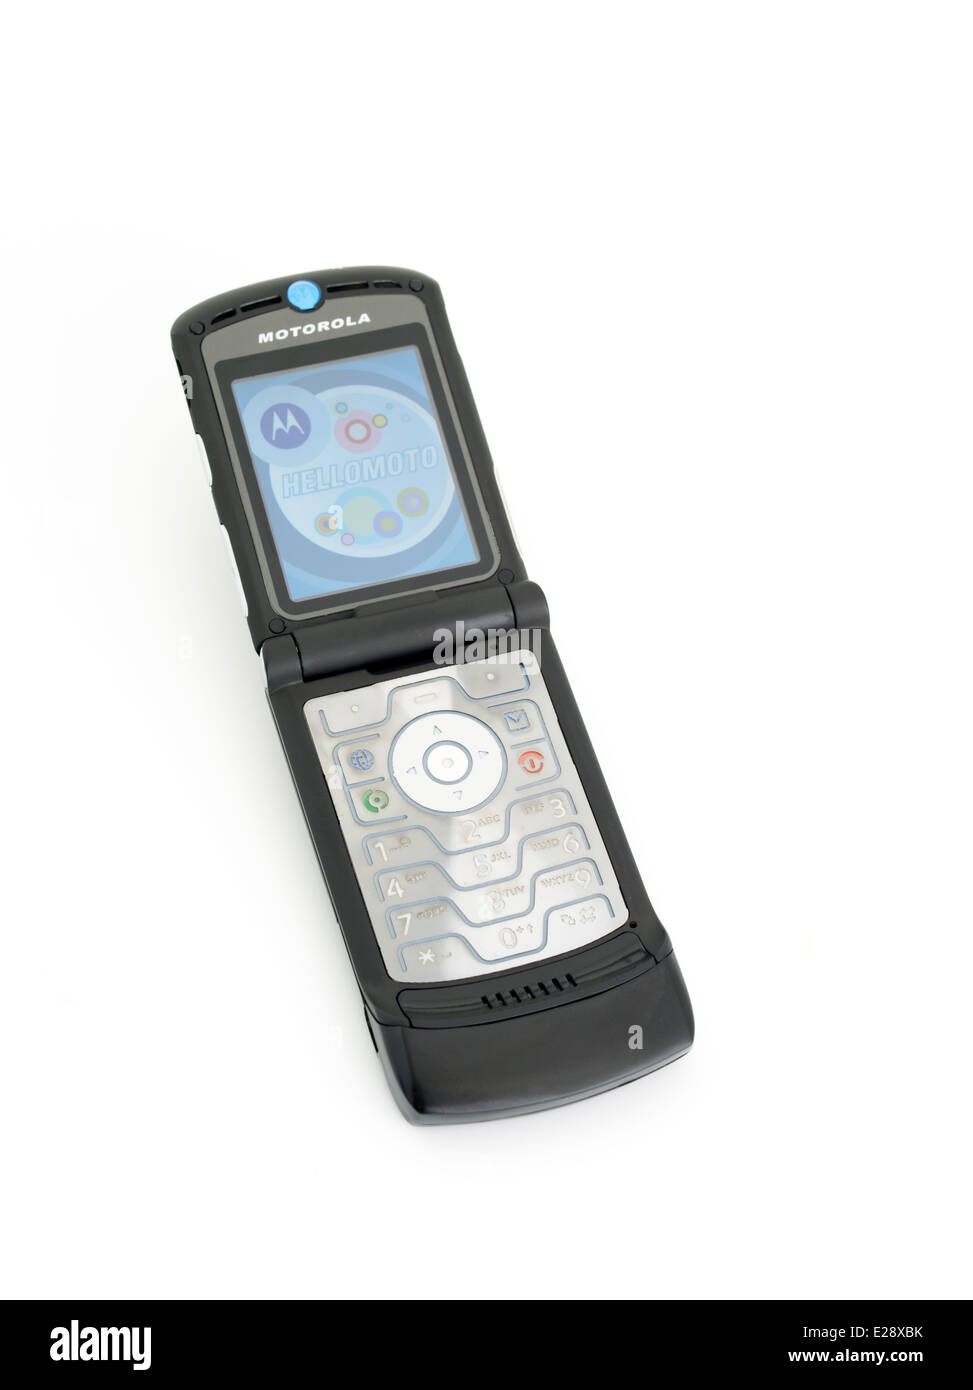 Motorola Razr V3 mobile cellular phone released 2004 Stock Photo